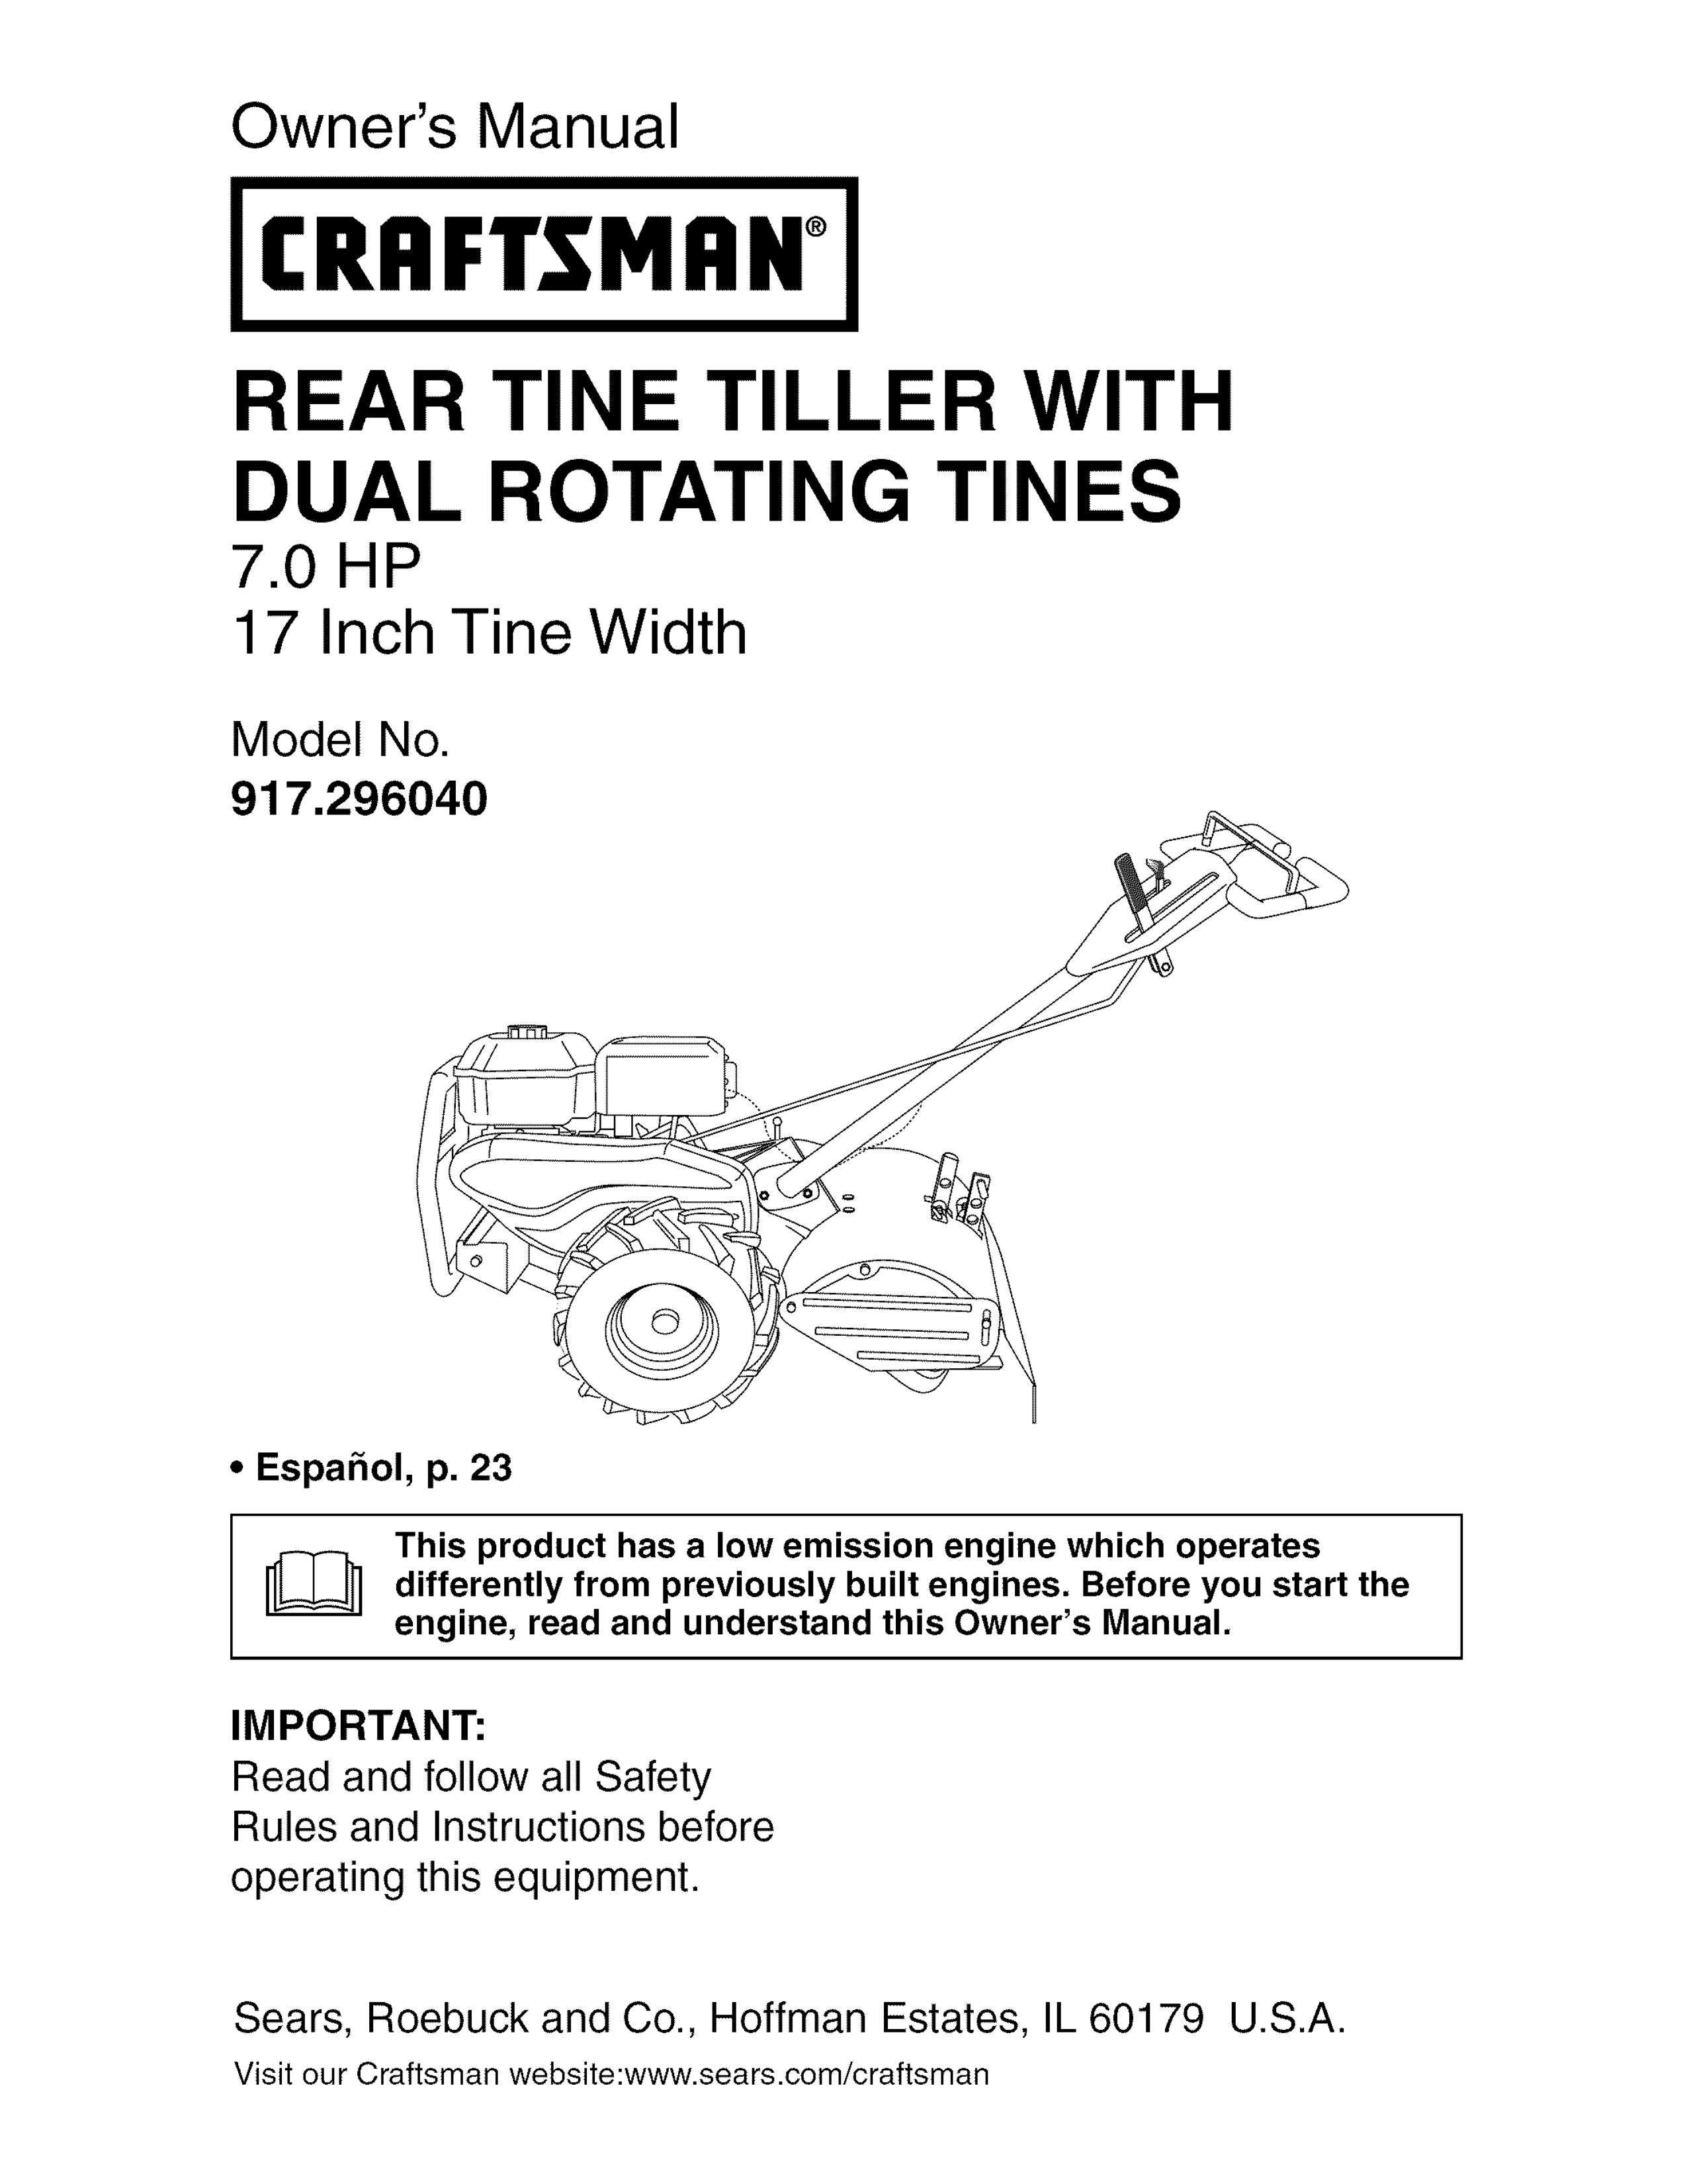 Craftsman 917.29604 Tiller User Manual